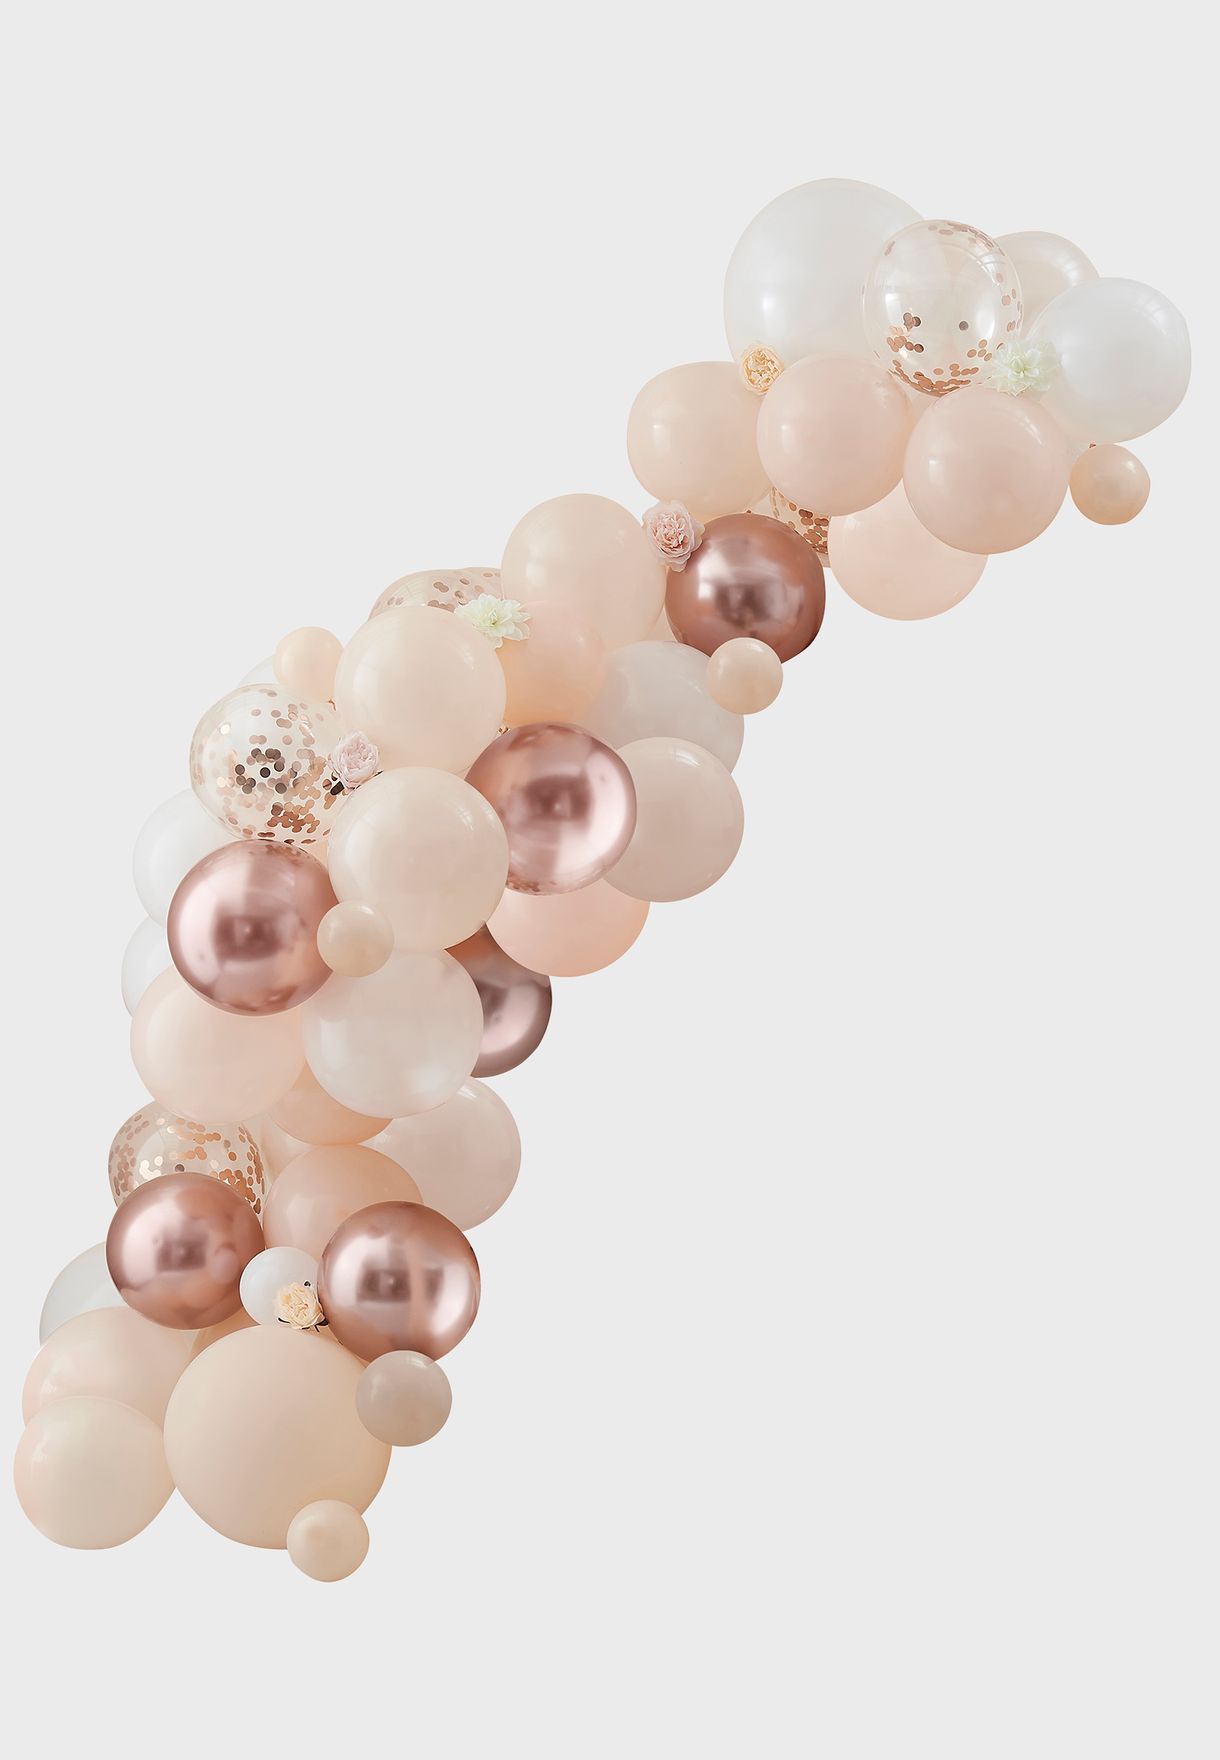 Balloon Arch - Peach, White And Rose Gold Confetti